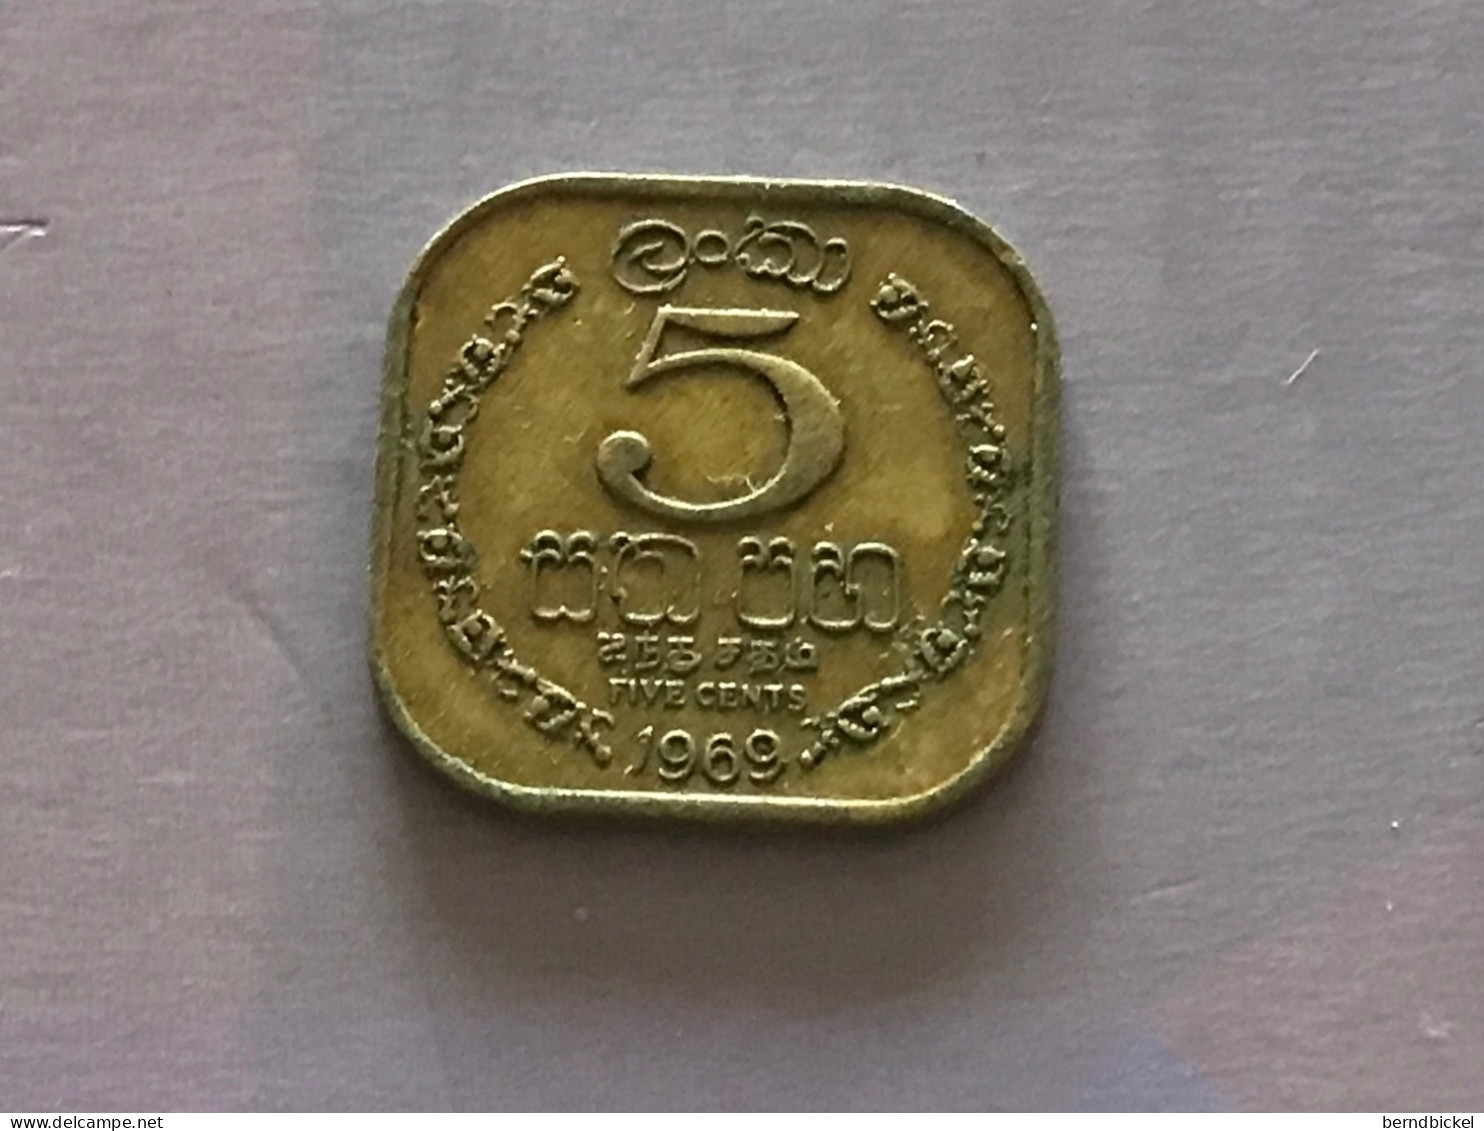 Münze Münzen Umlaufmünze Sri Lanka 5 Cents 1969 - Sri Lanka